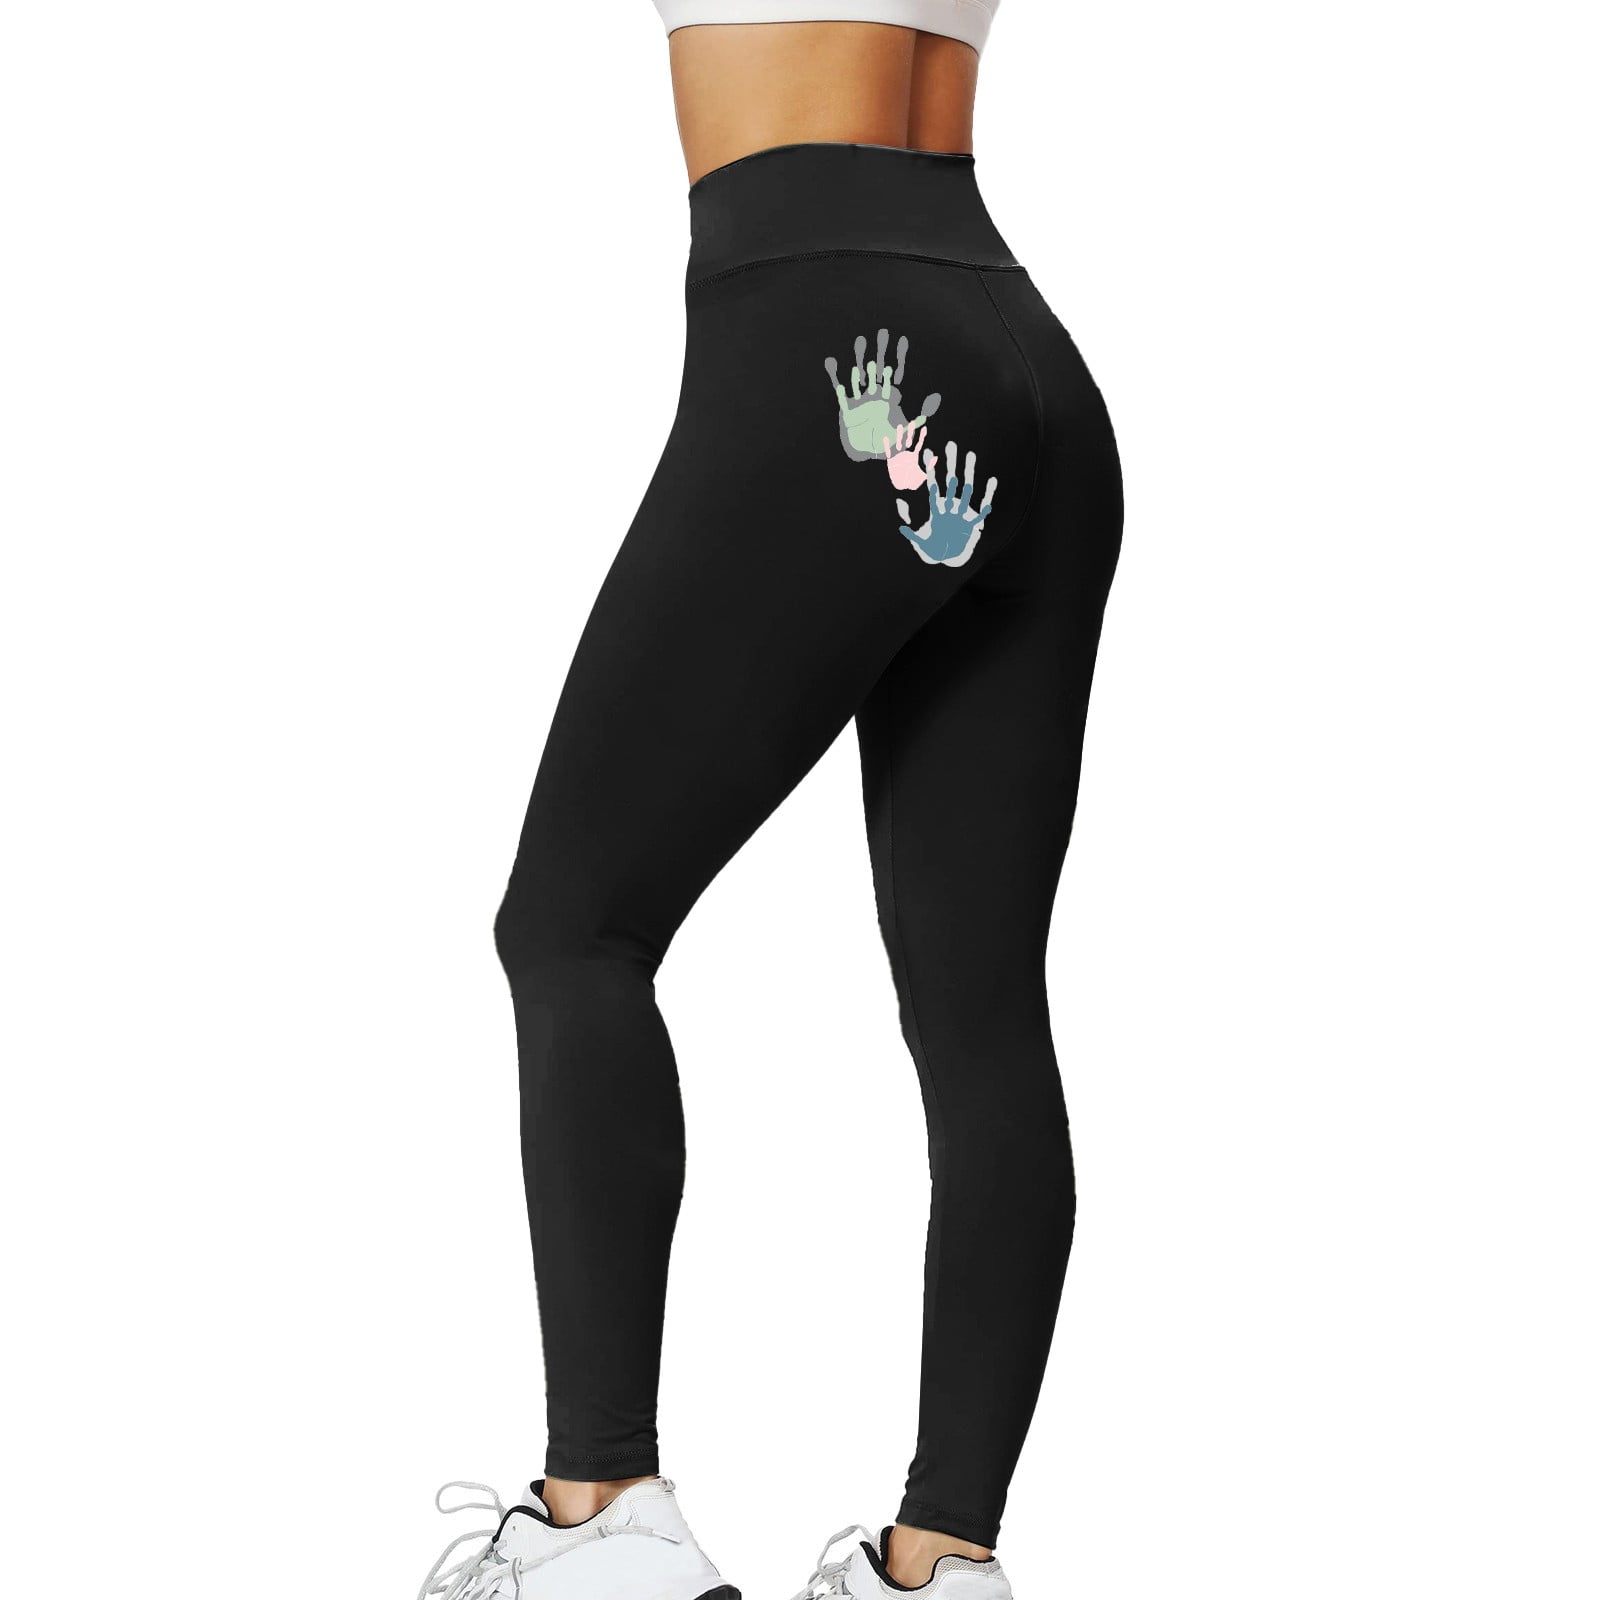 adviicd Yoga Pants For Women Dressy Yoga Dress Pants For Women Biker pants  for Women, High Waisted Workout Compression Yoga pants Black L 